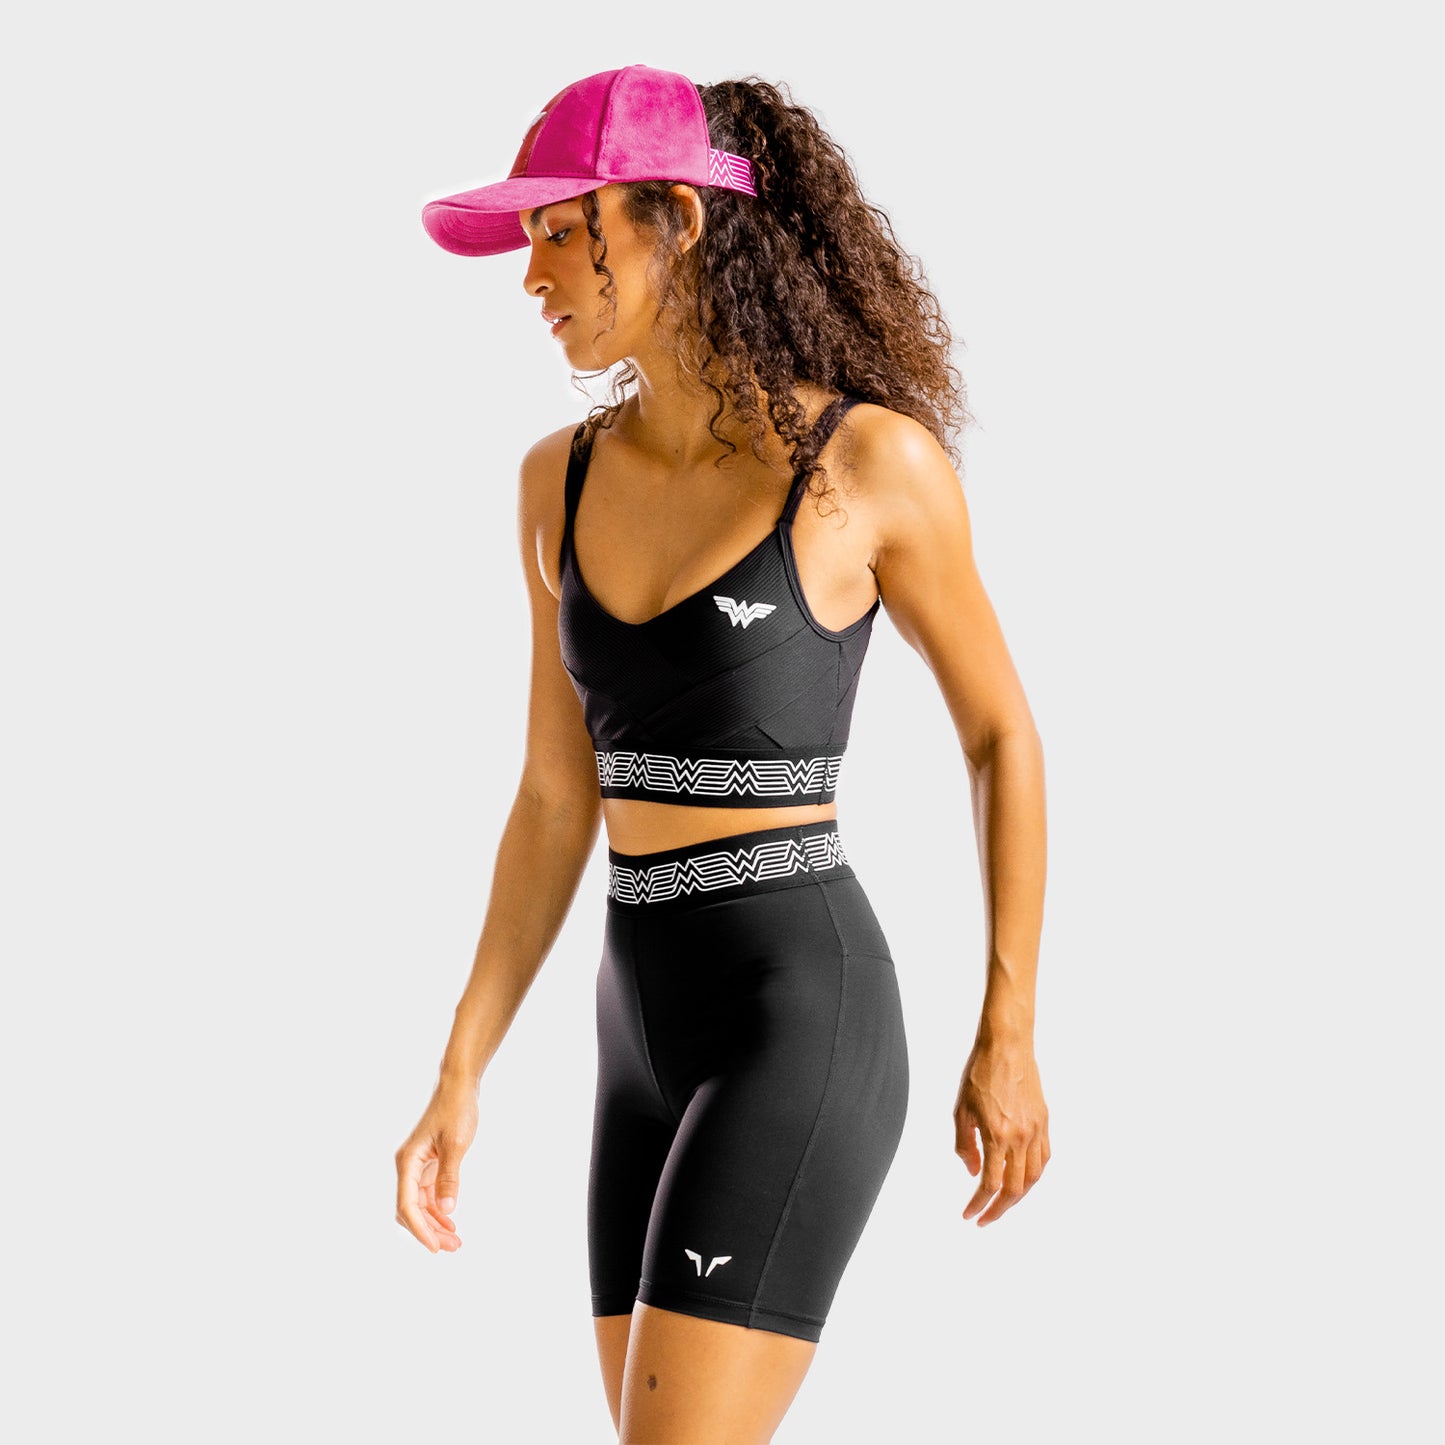 squatwolf-gym-caps-for-women-wonder-woman-cap-pink-workout-clothes